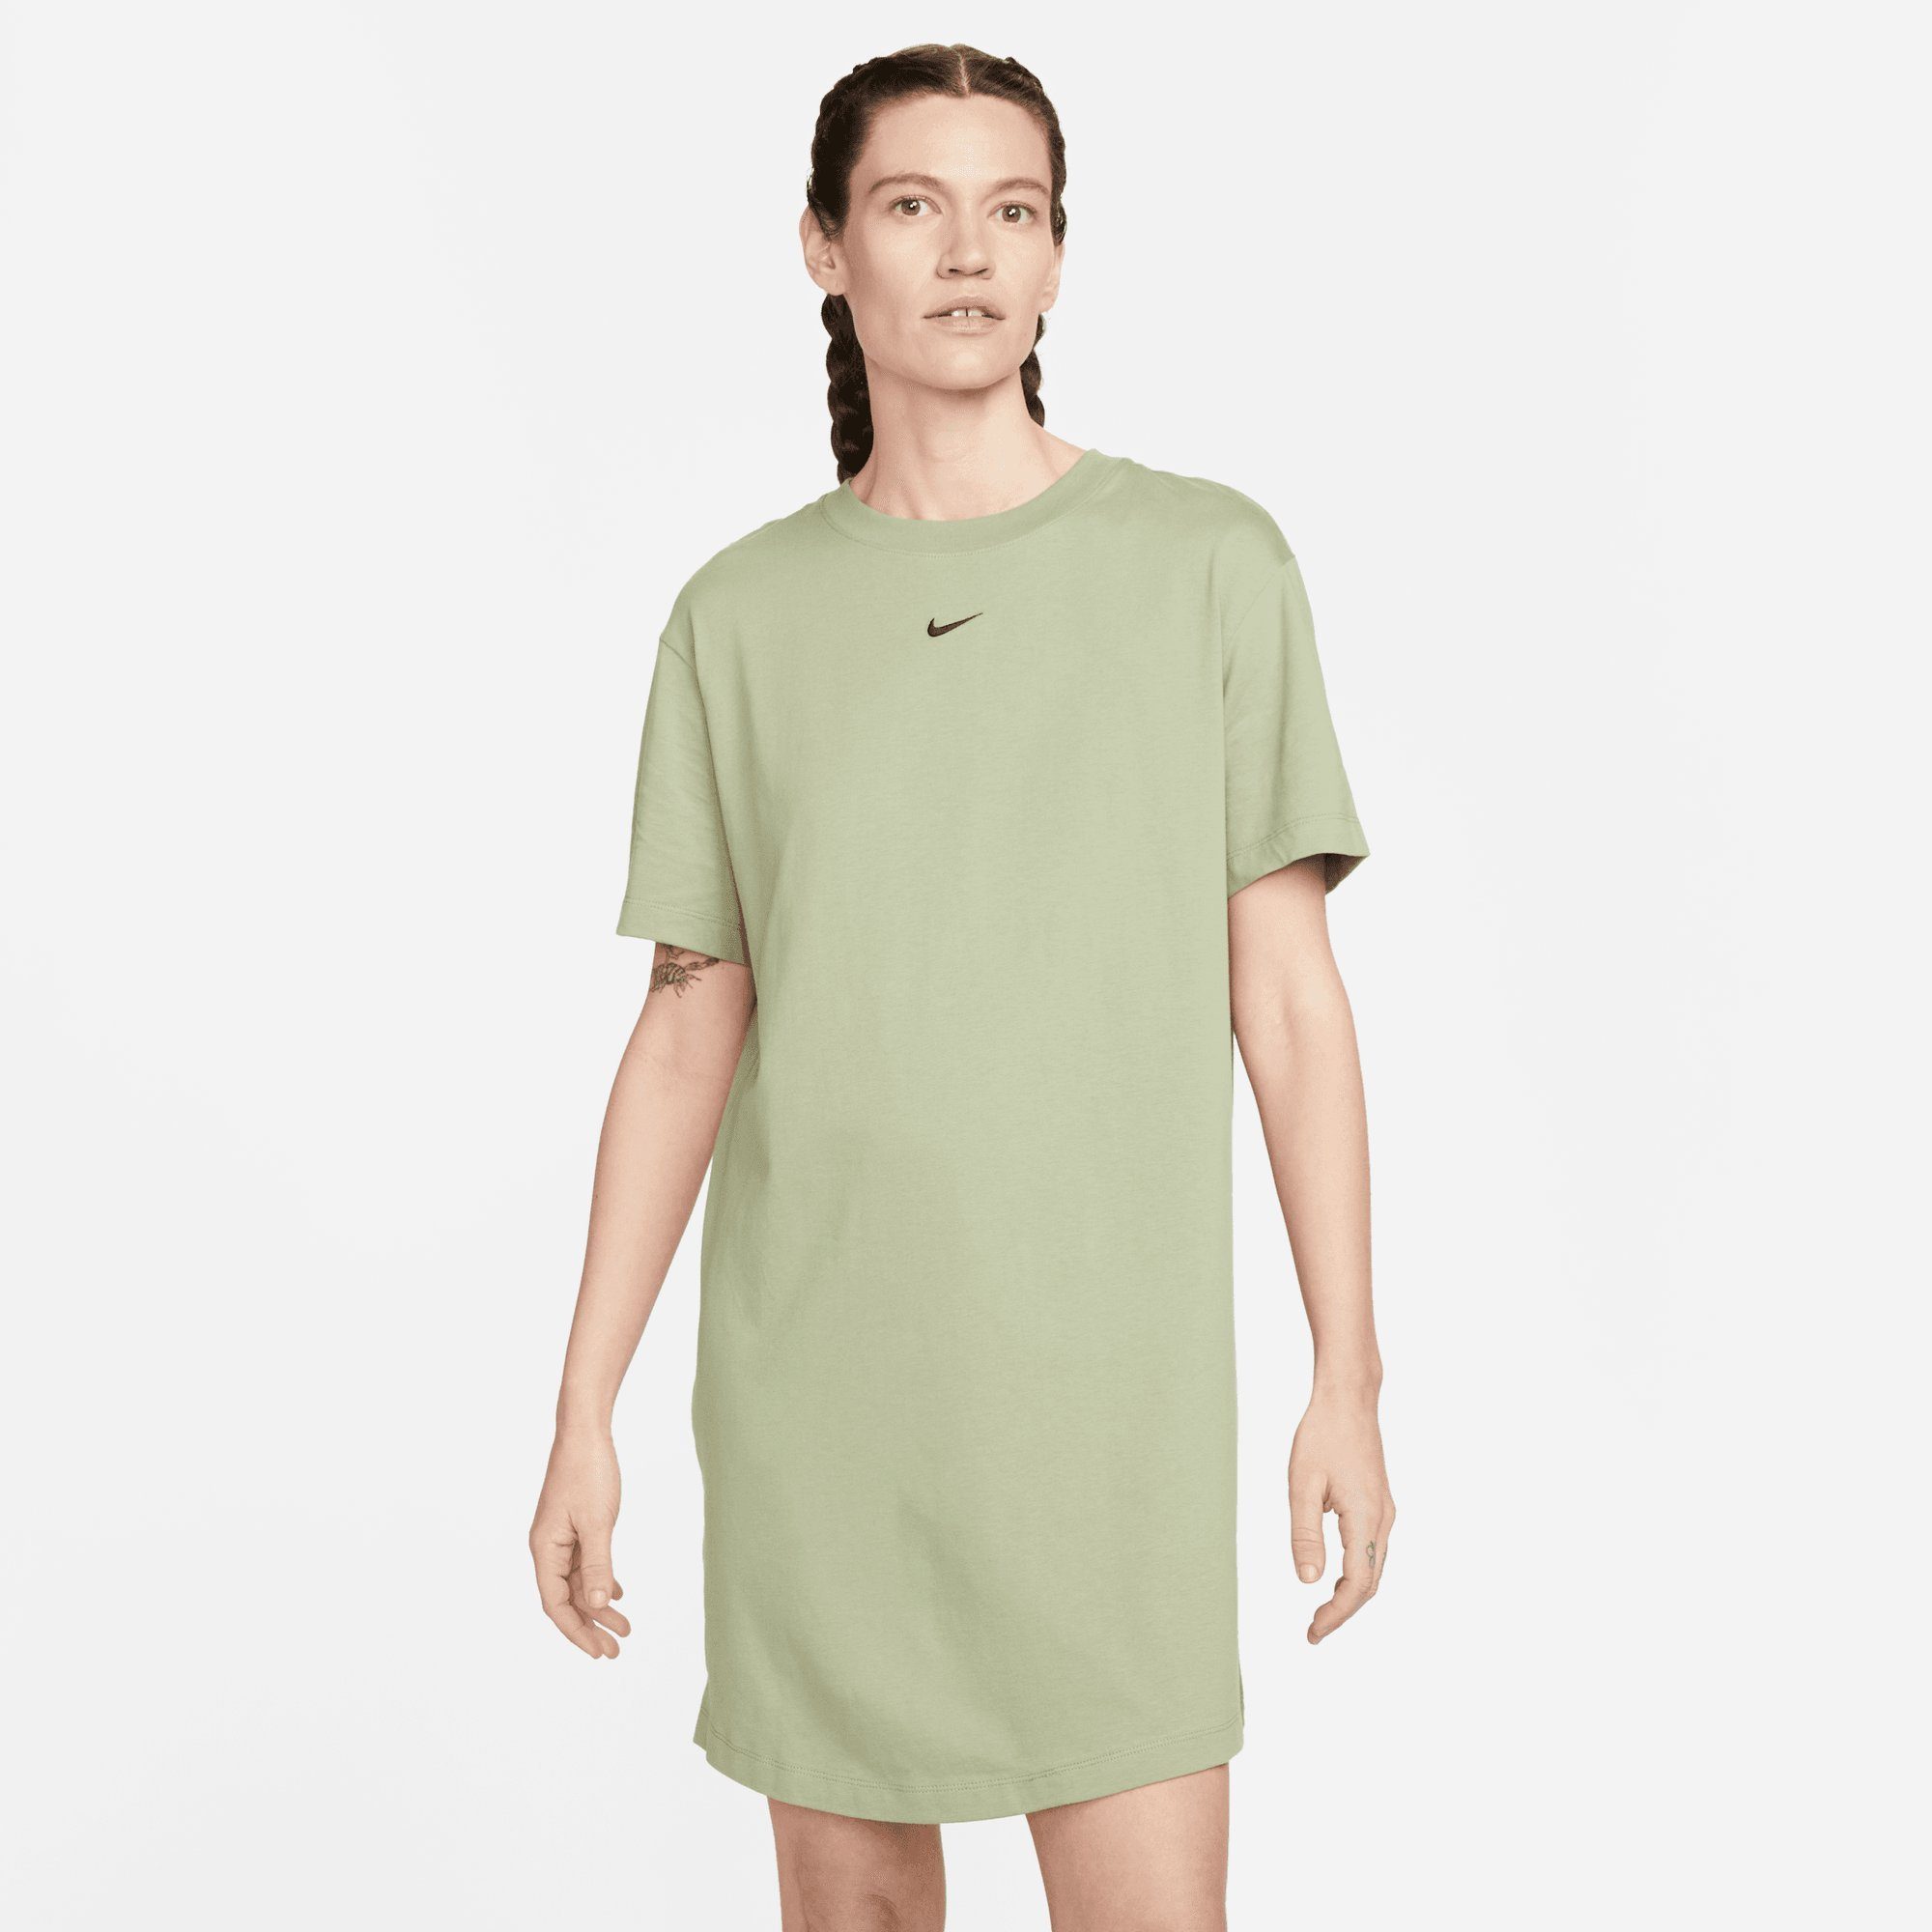 SHORT-SLEEVE OIL Sommerkleid ESSENTIAL GREEN/BLACK WOMEN'S Sportswear Nike DRESS